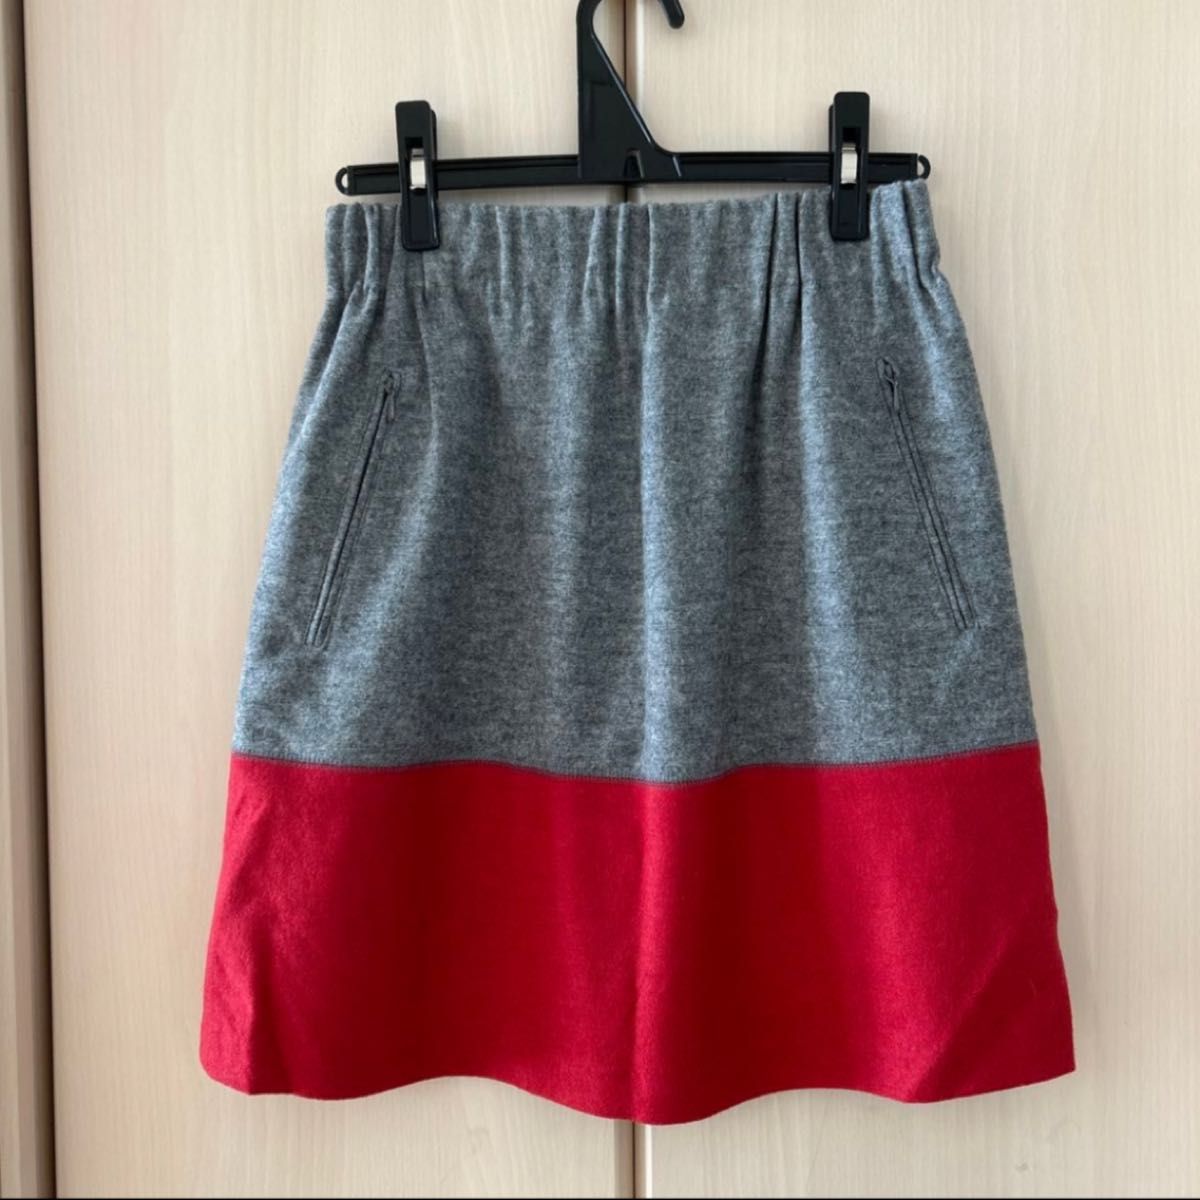 【PLST】(着用回数少なめ・美品)グレー&赤 ウエストゴム 切替え ウール スカート 2